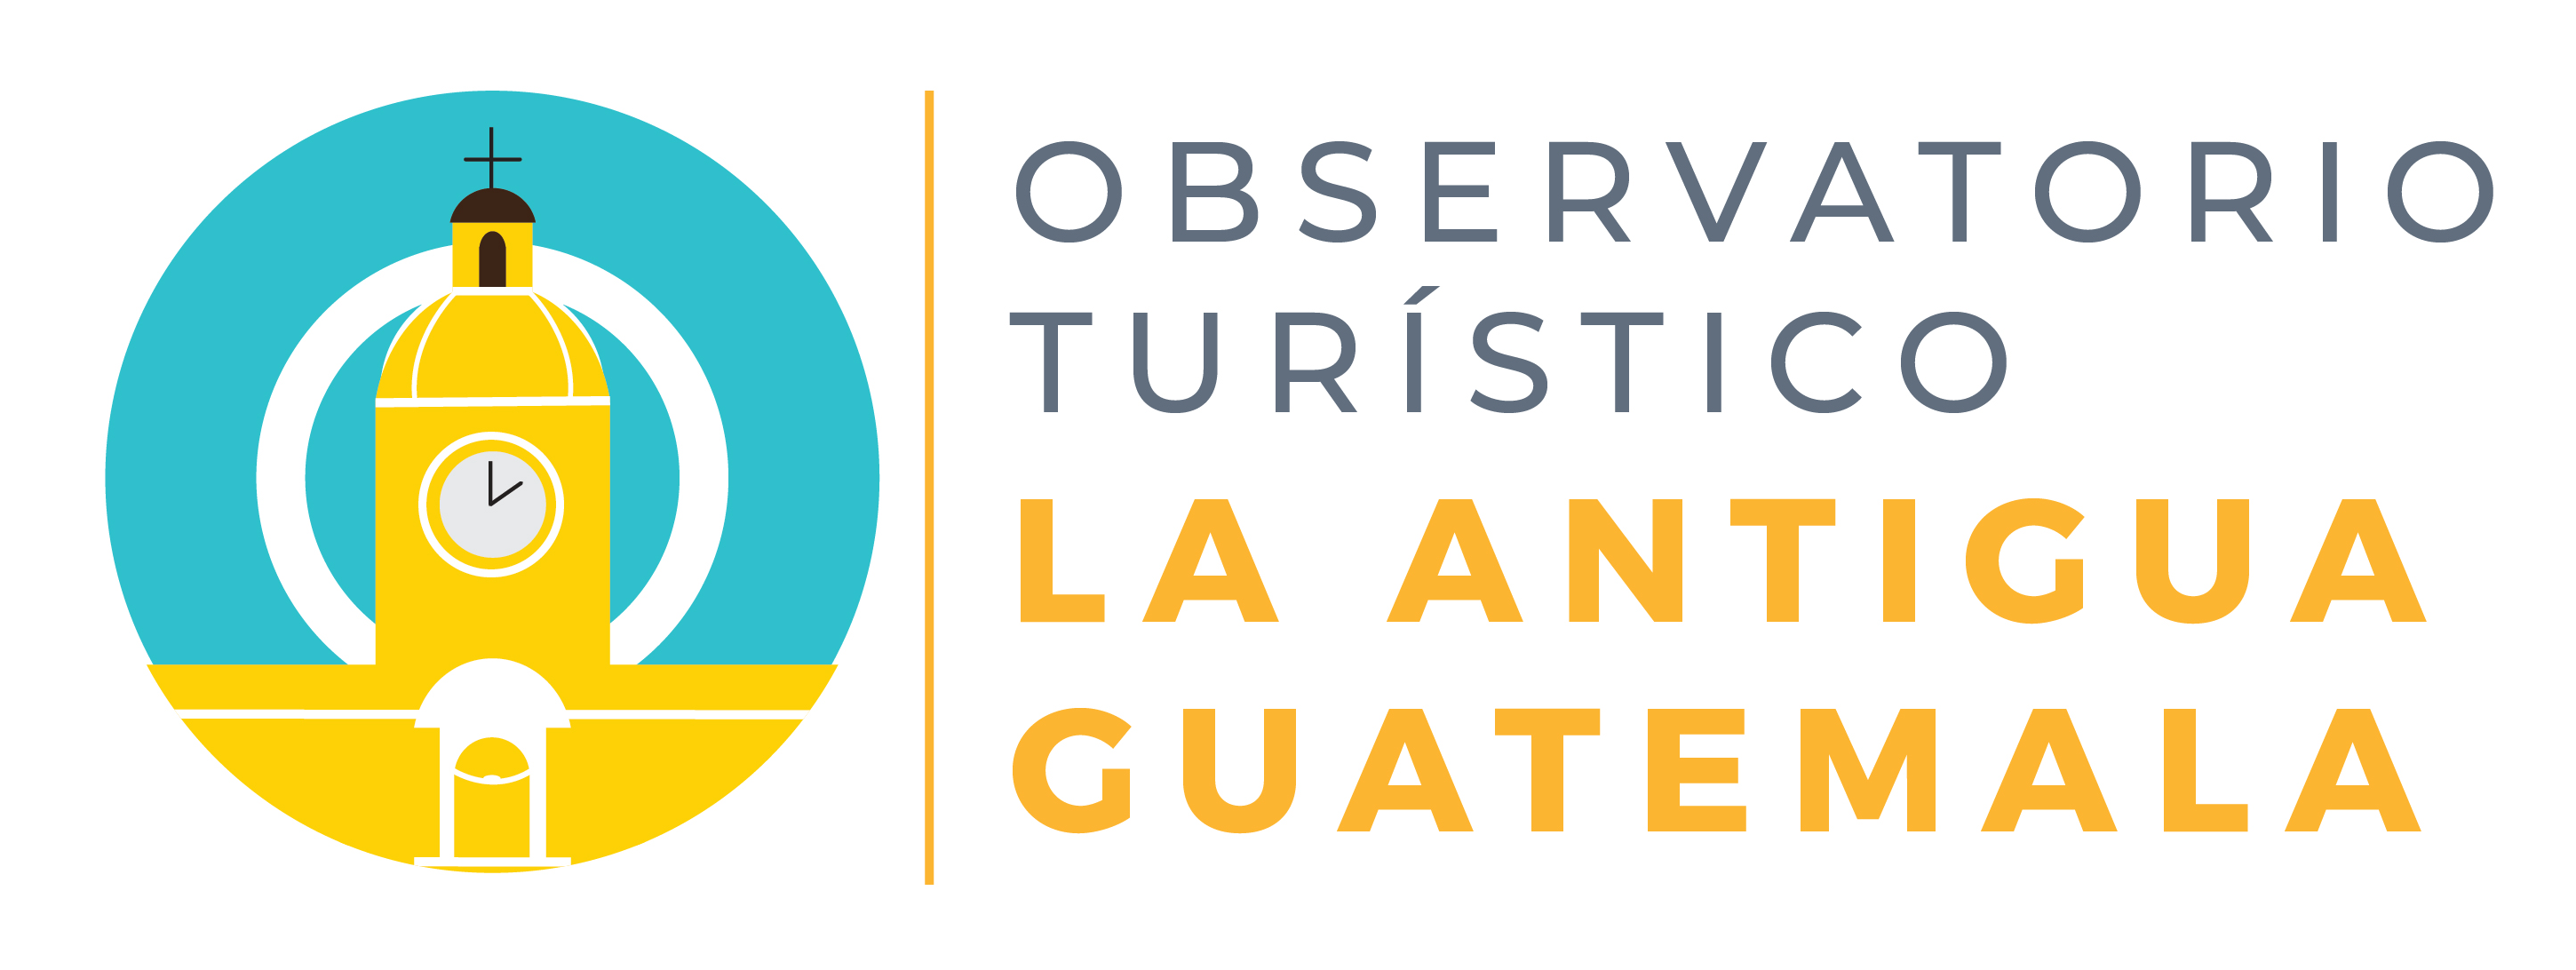 Observatorio turístico de Antigua Guatemala